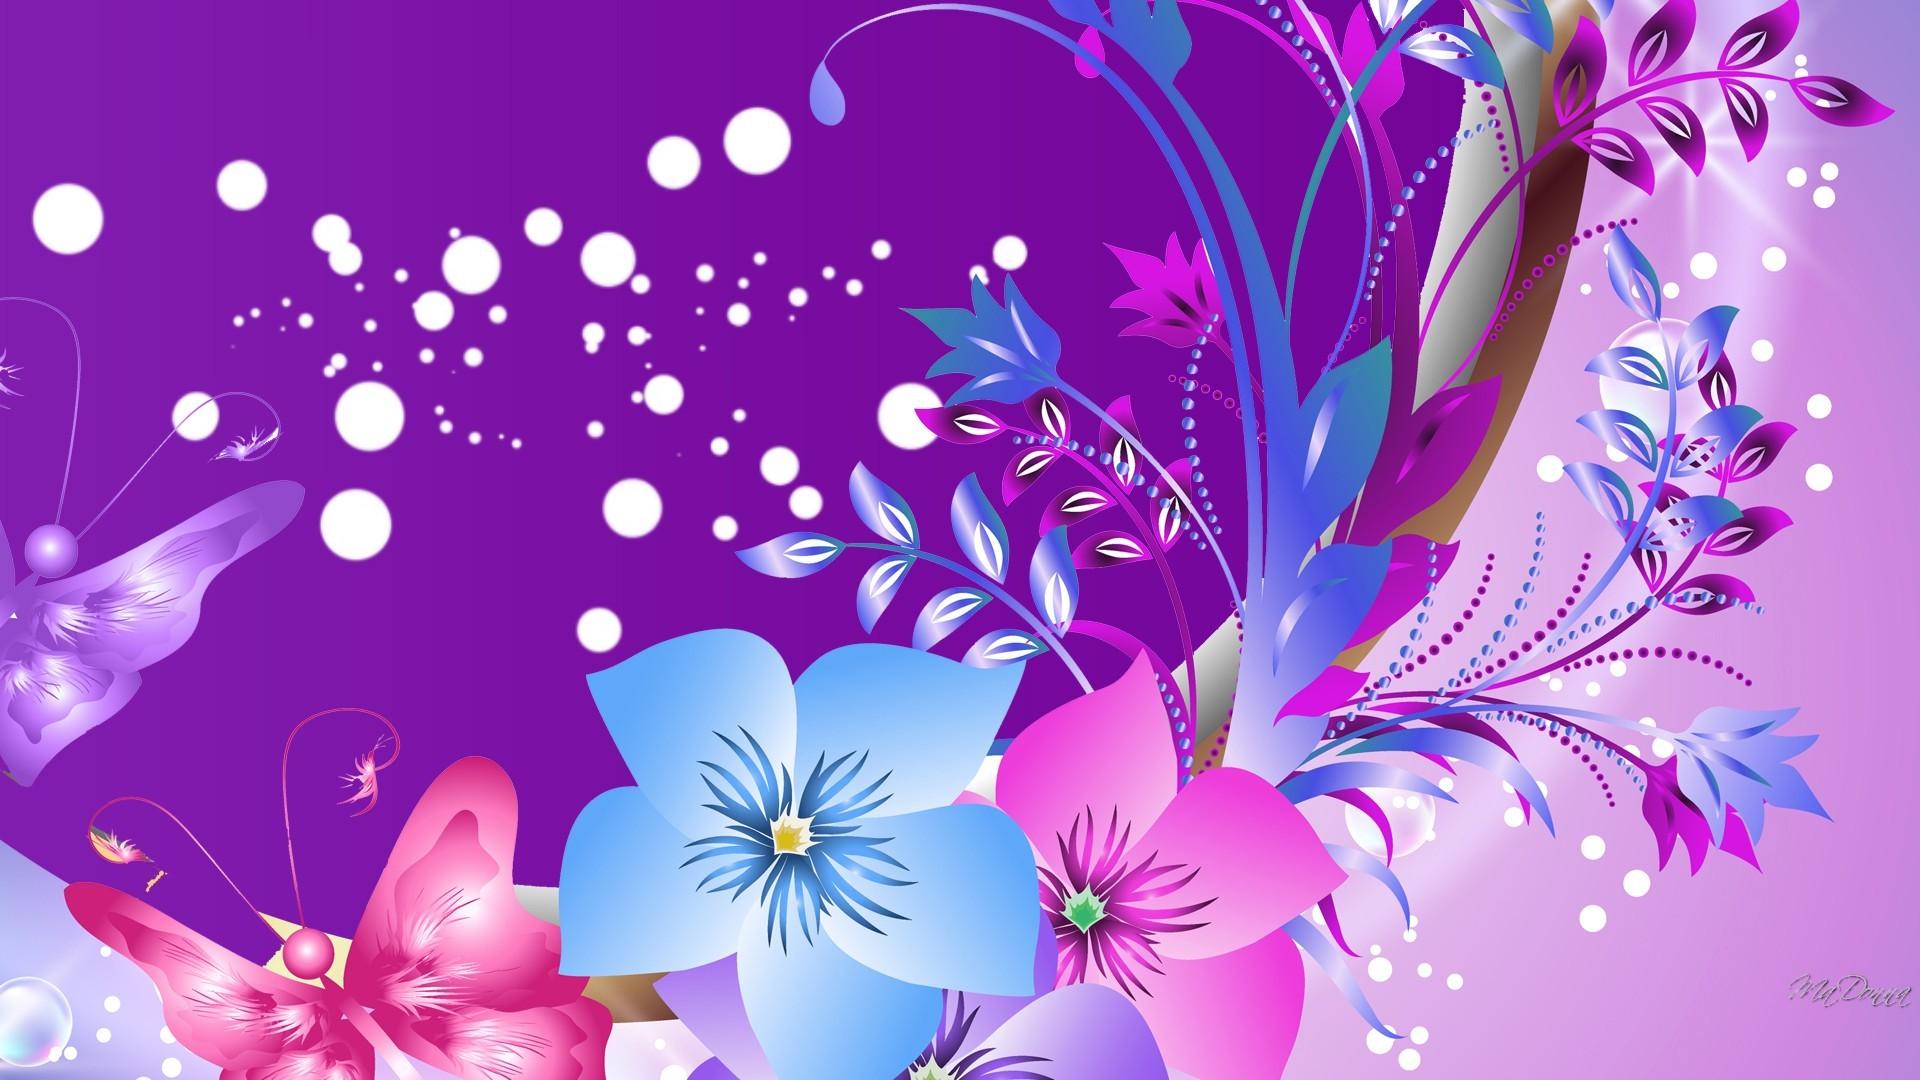 Fresh Flowers Background Wallpaper Hd For Desktop  Wallpapers13com